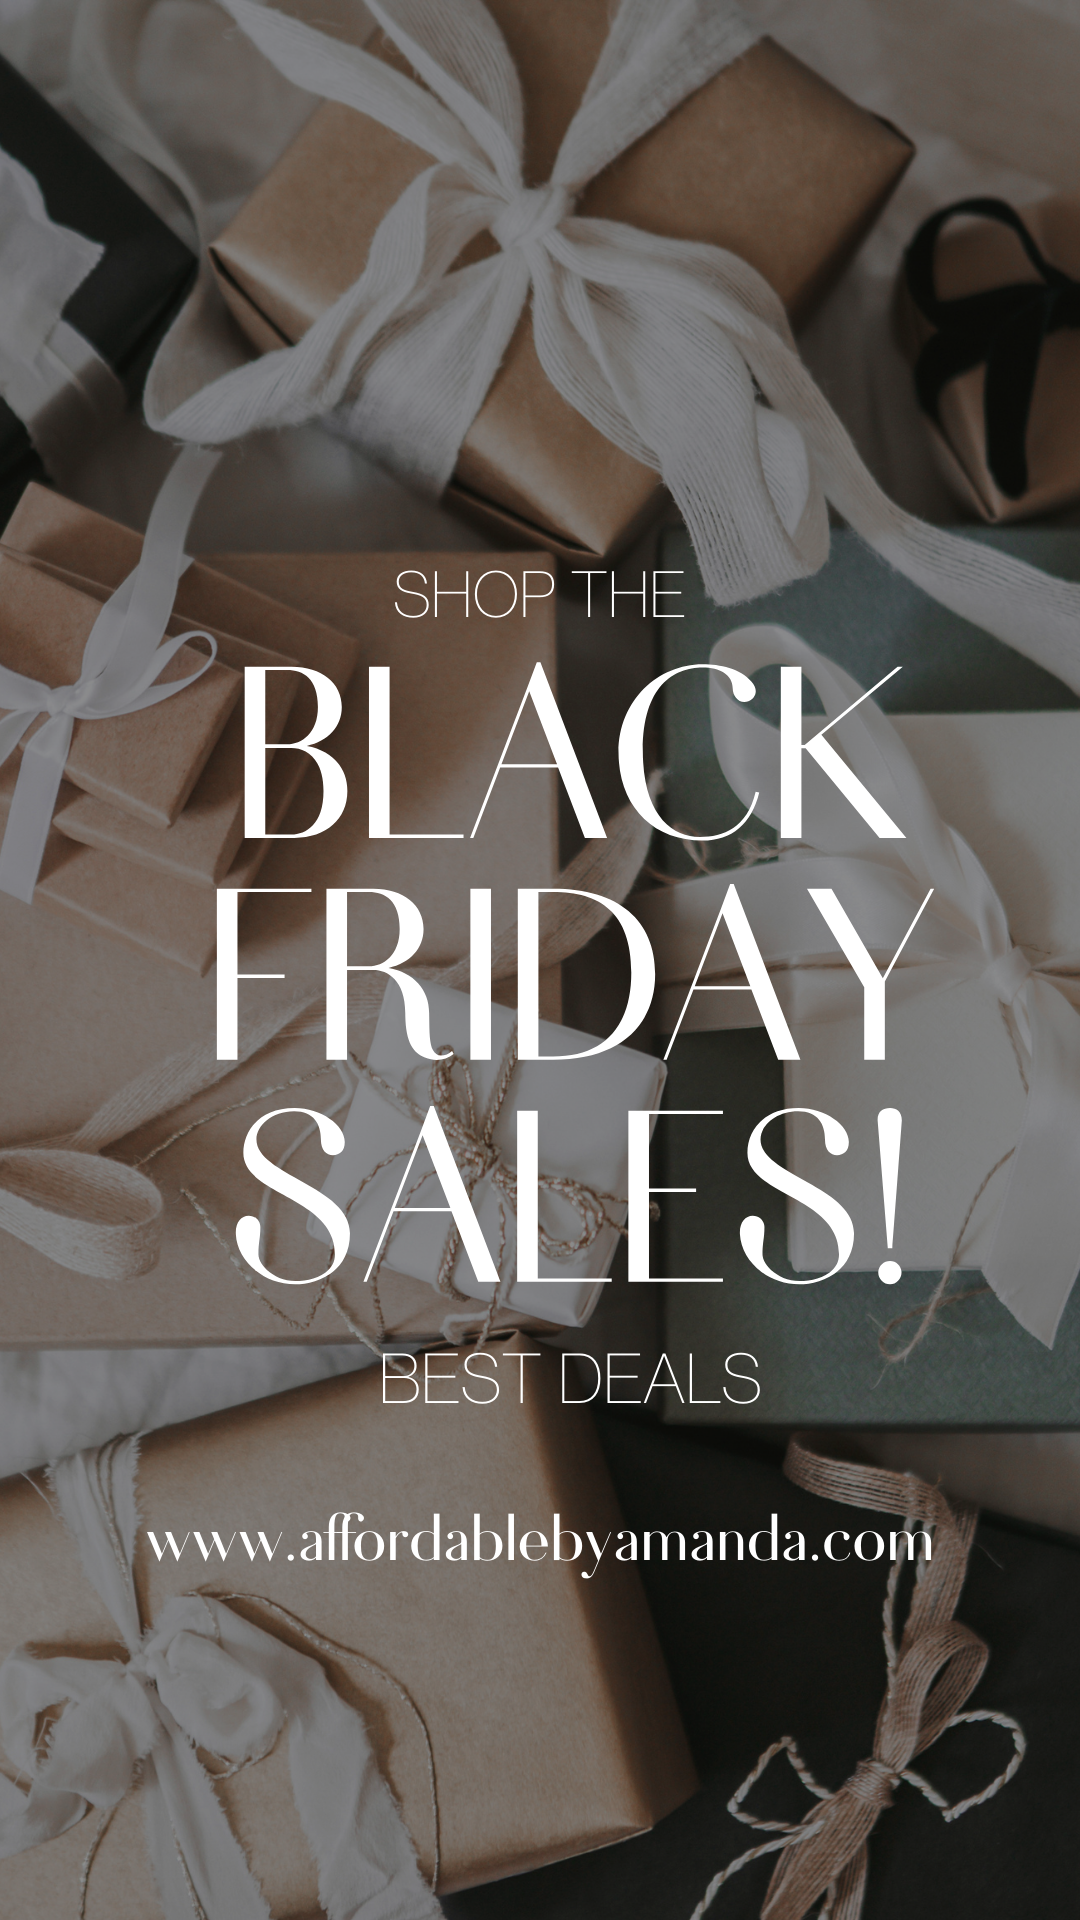 Best Black Friday Sales 2021 | Affordable by Amanda